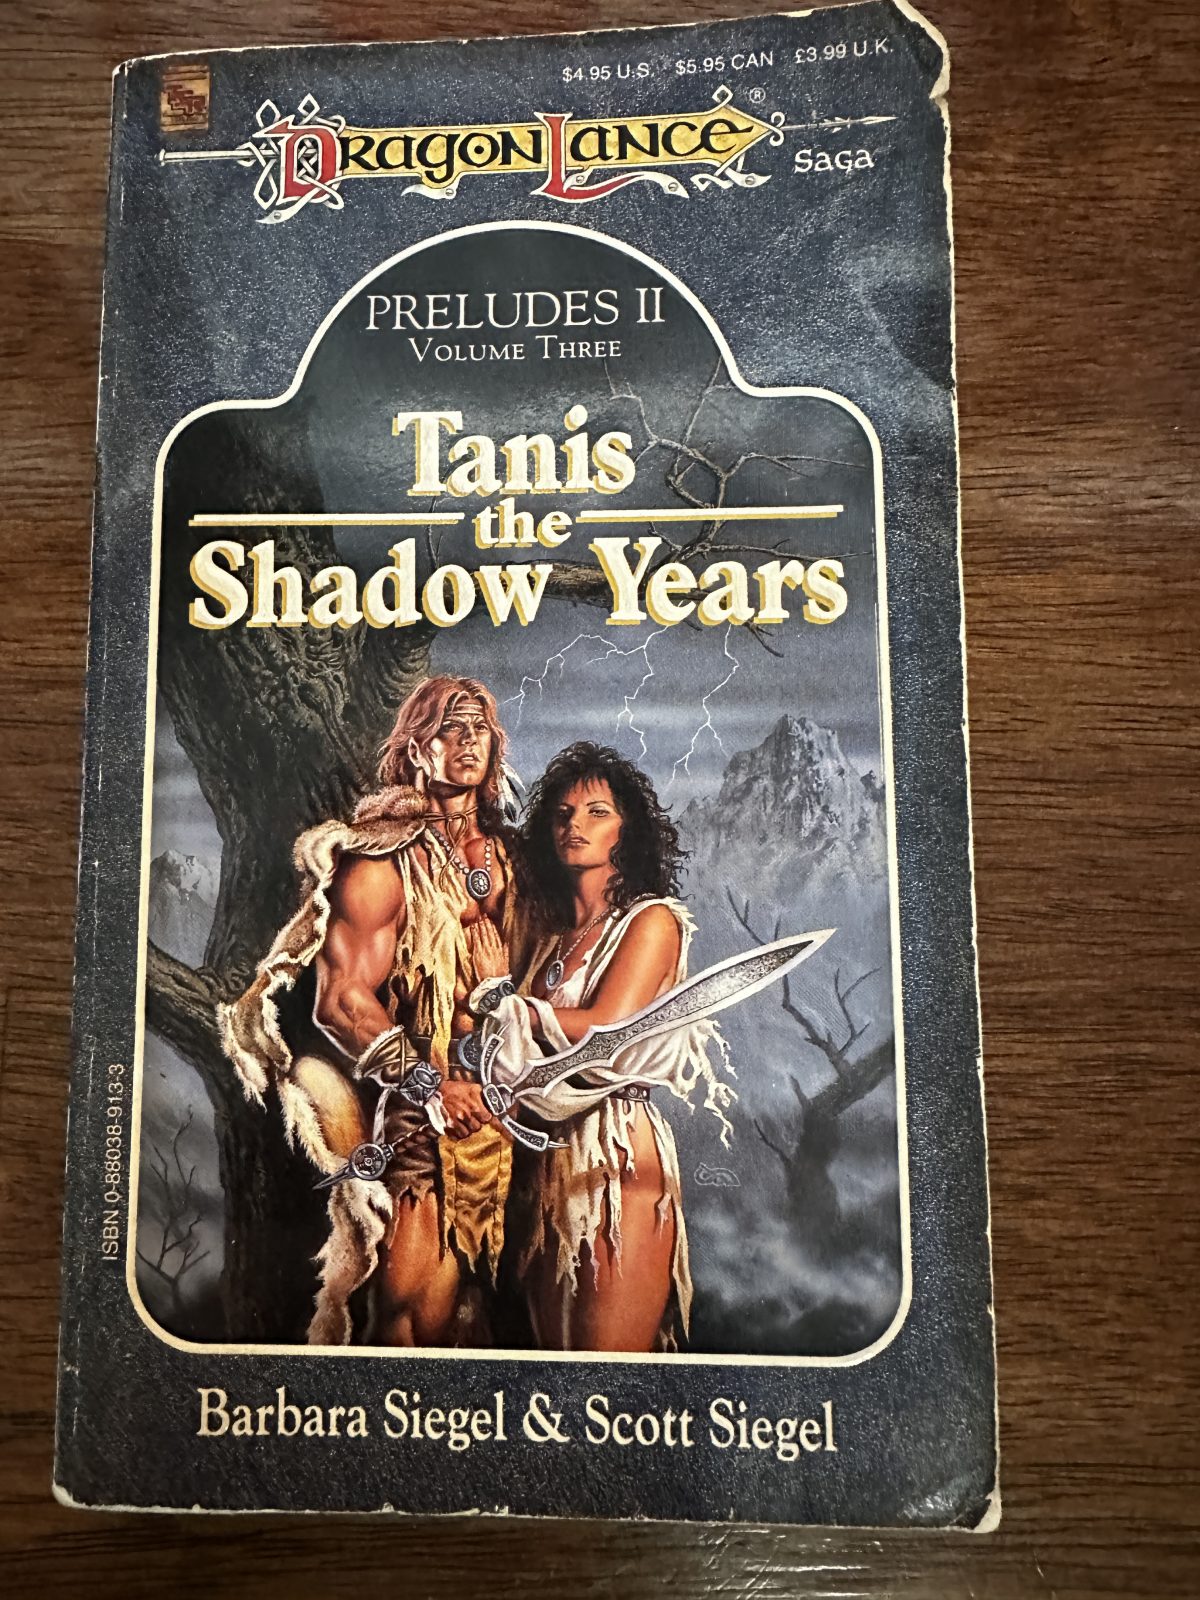 DragonLance Preludes II Volume 3 – Tanis the Shadow Years